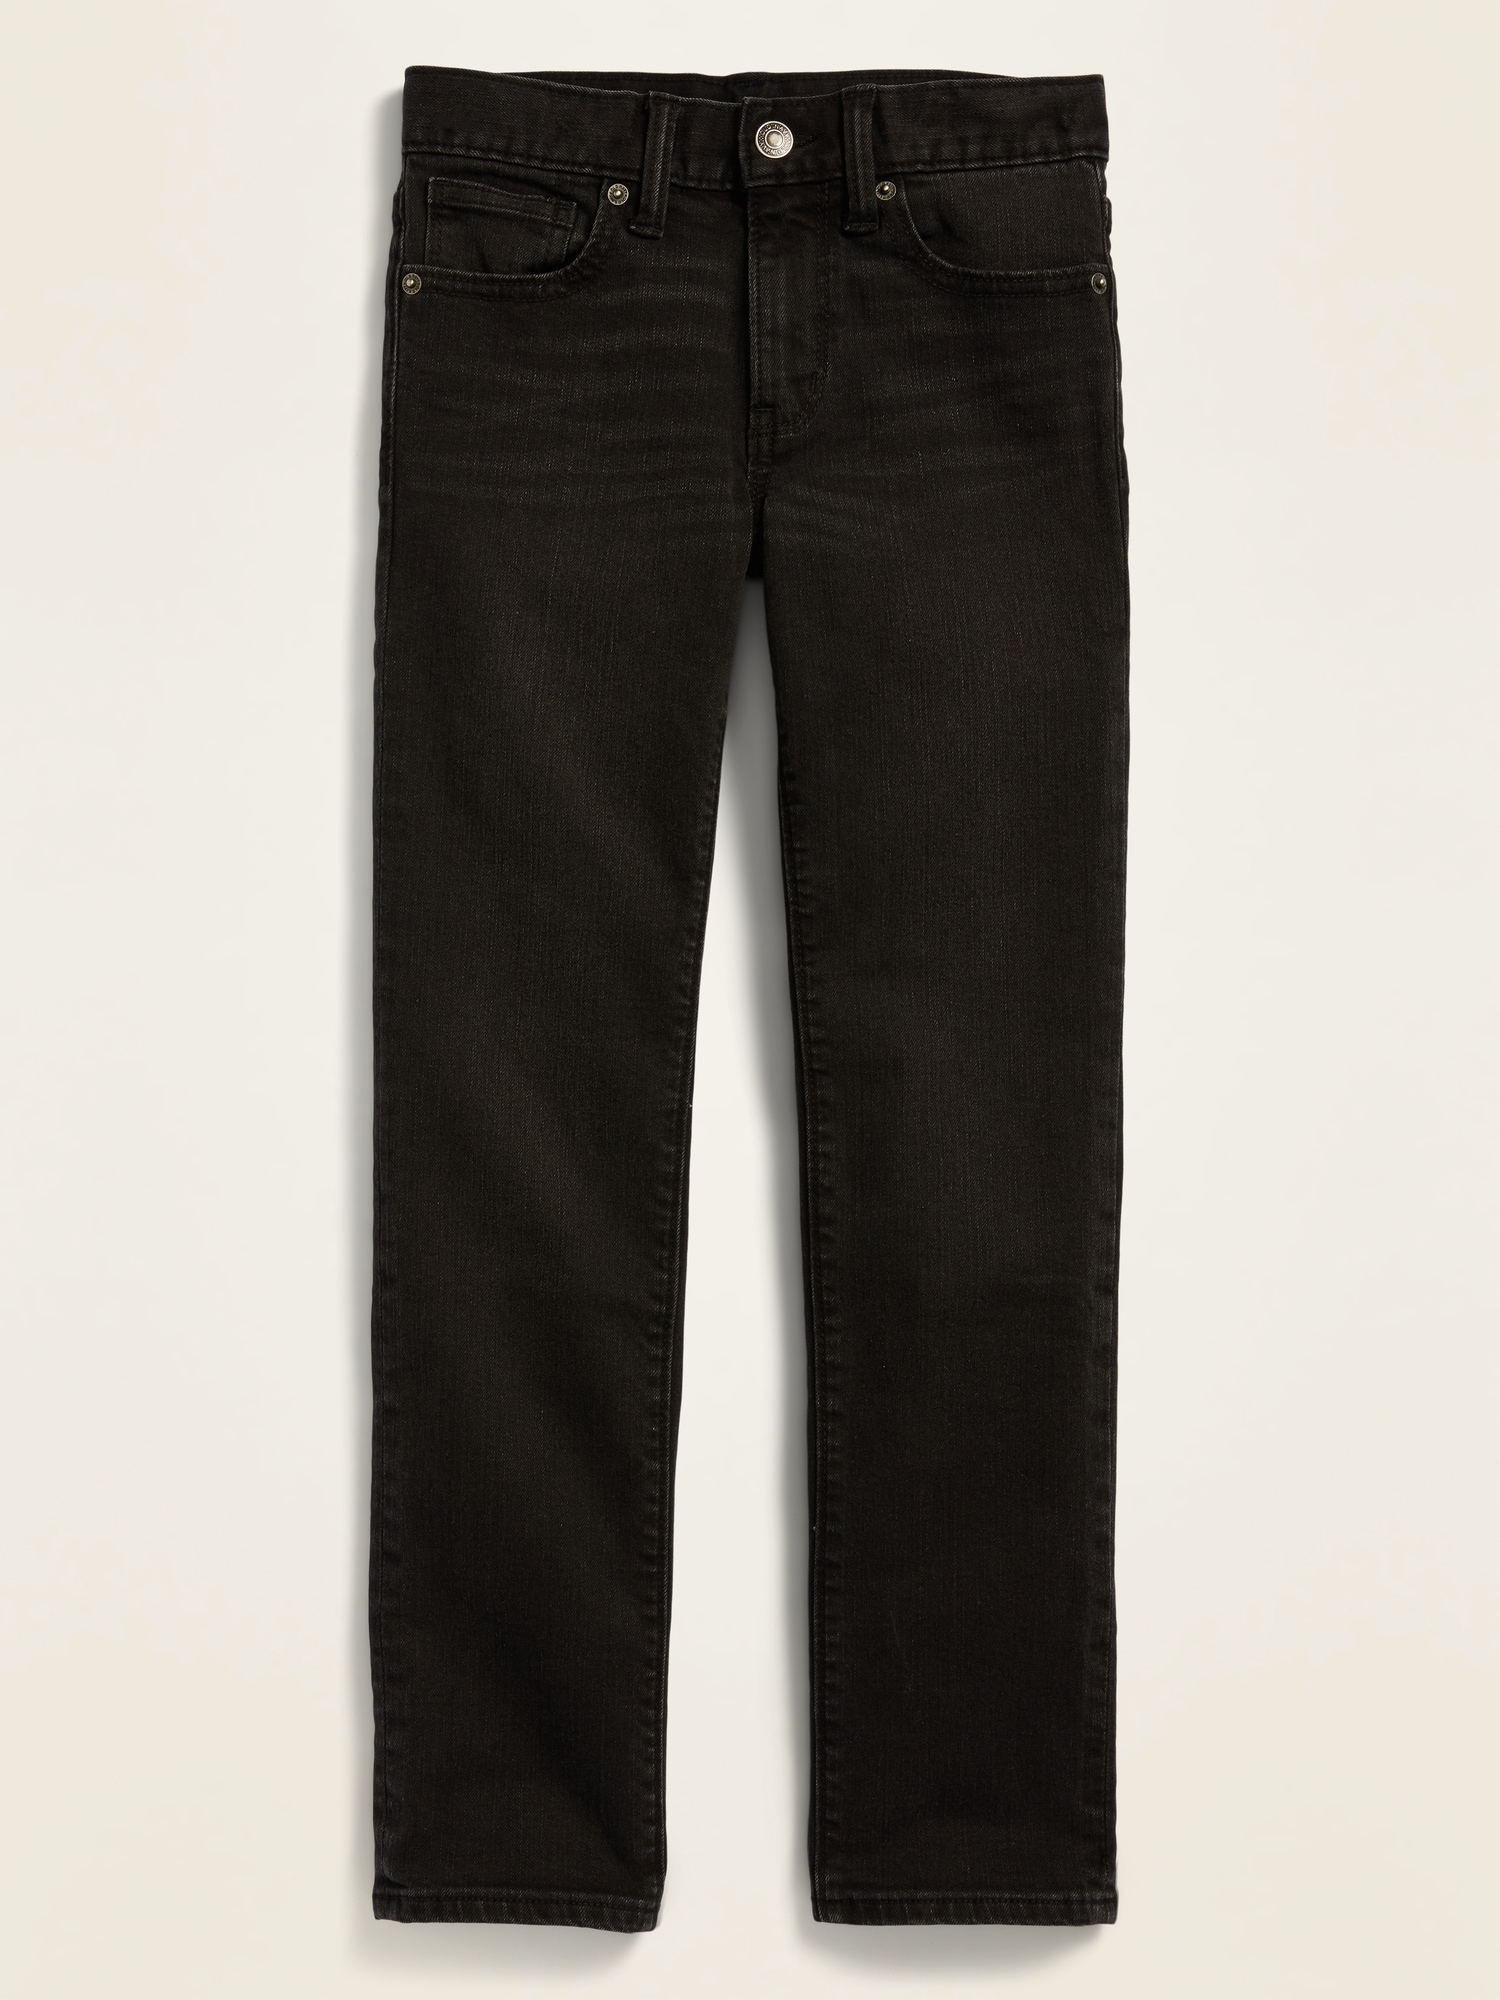 Built-In Flex Black Skinny Jeans for Boys